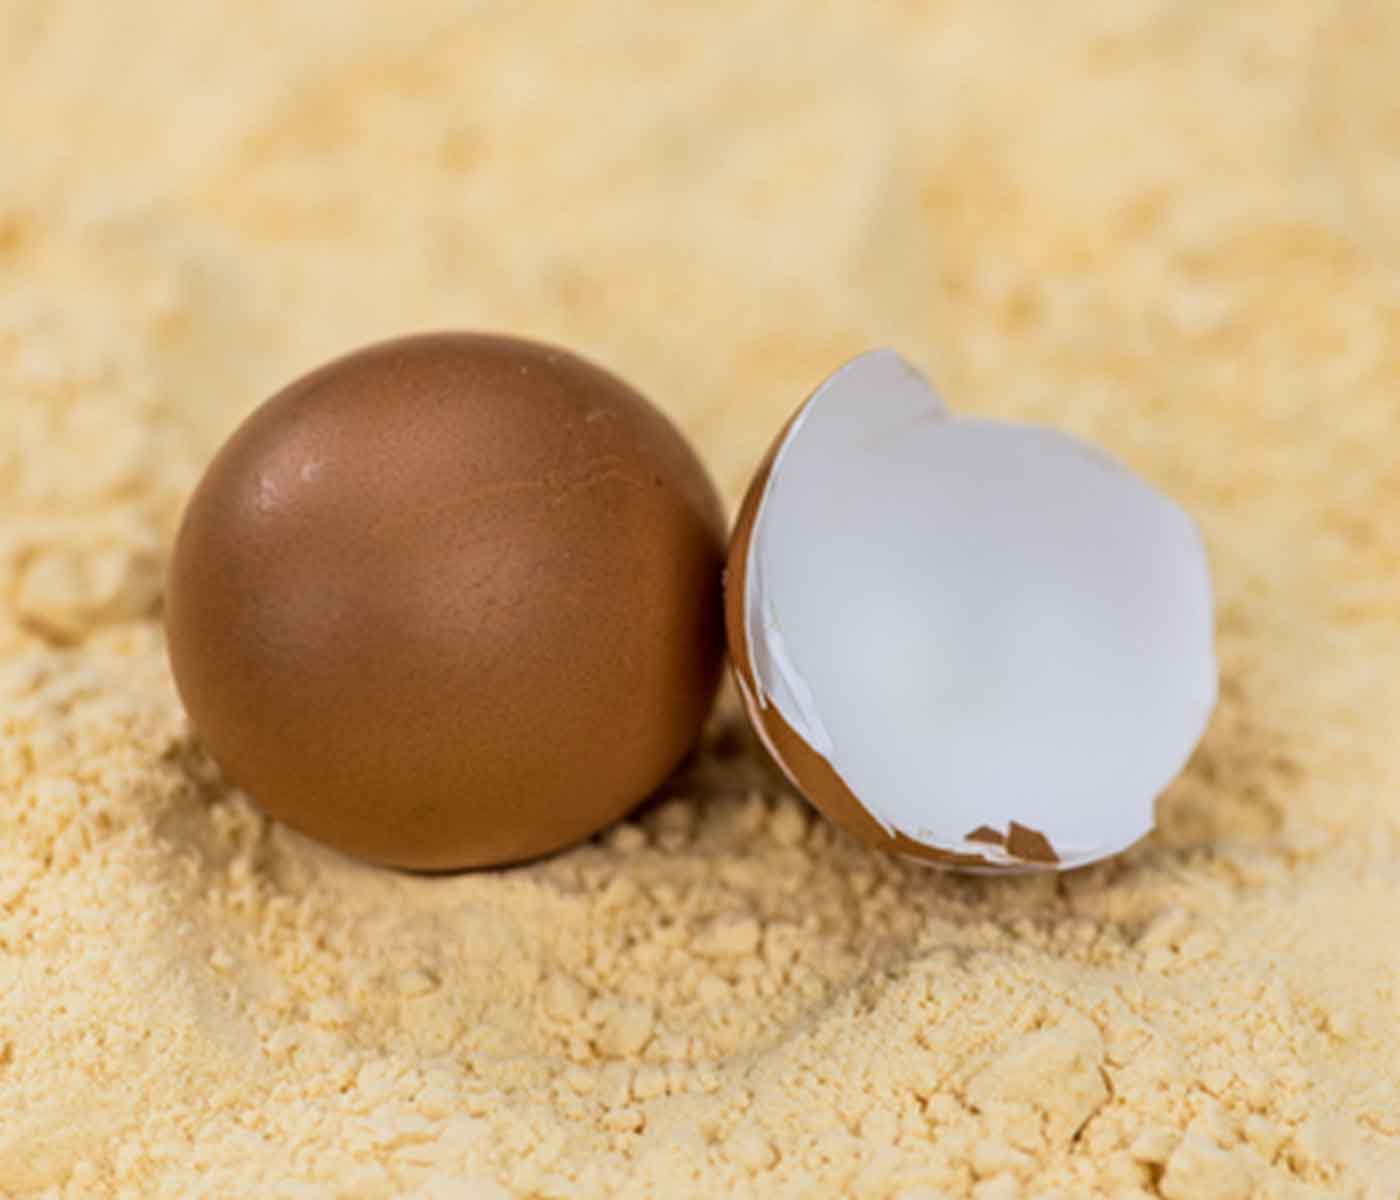 Spray-dried eggs are an alternative to battle malnutrition